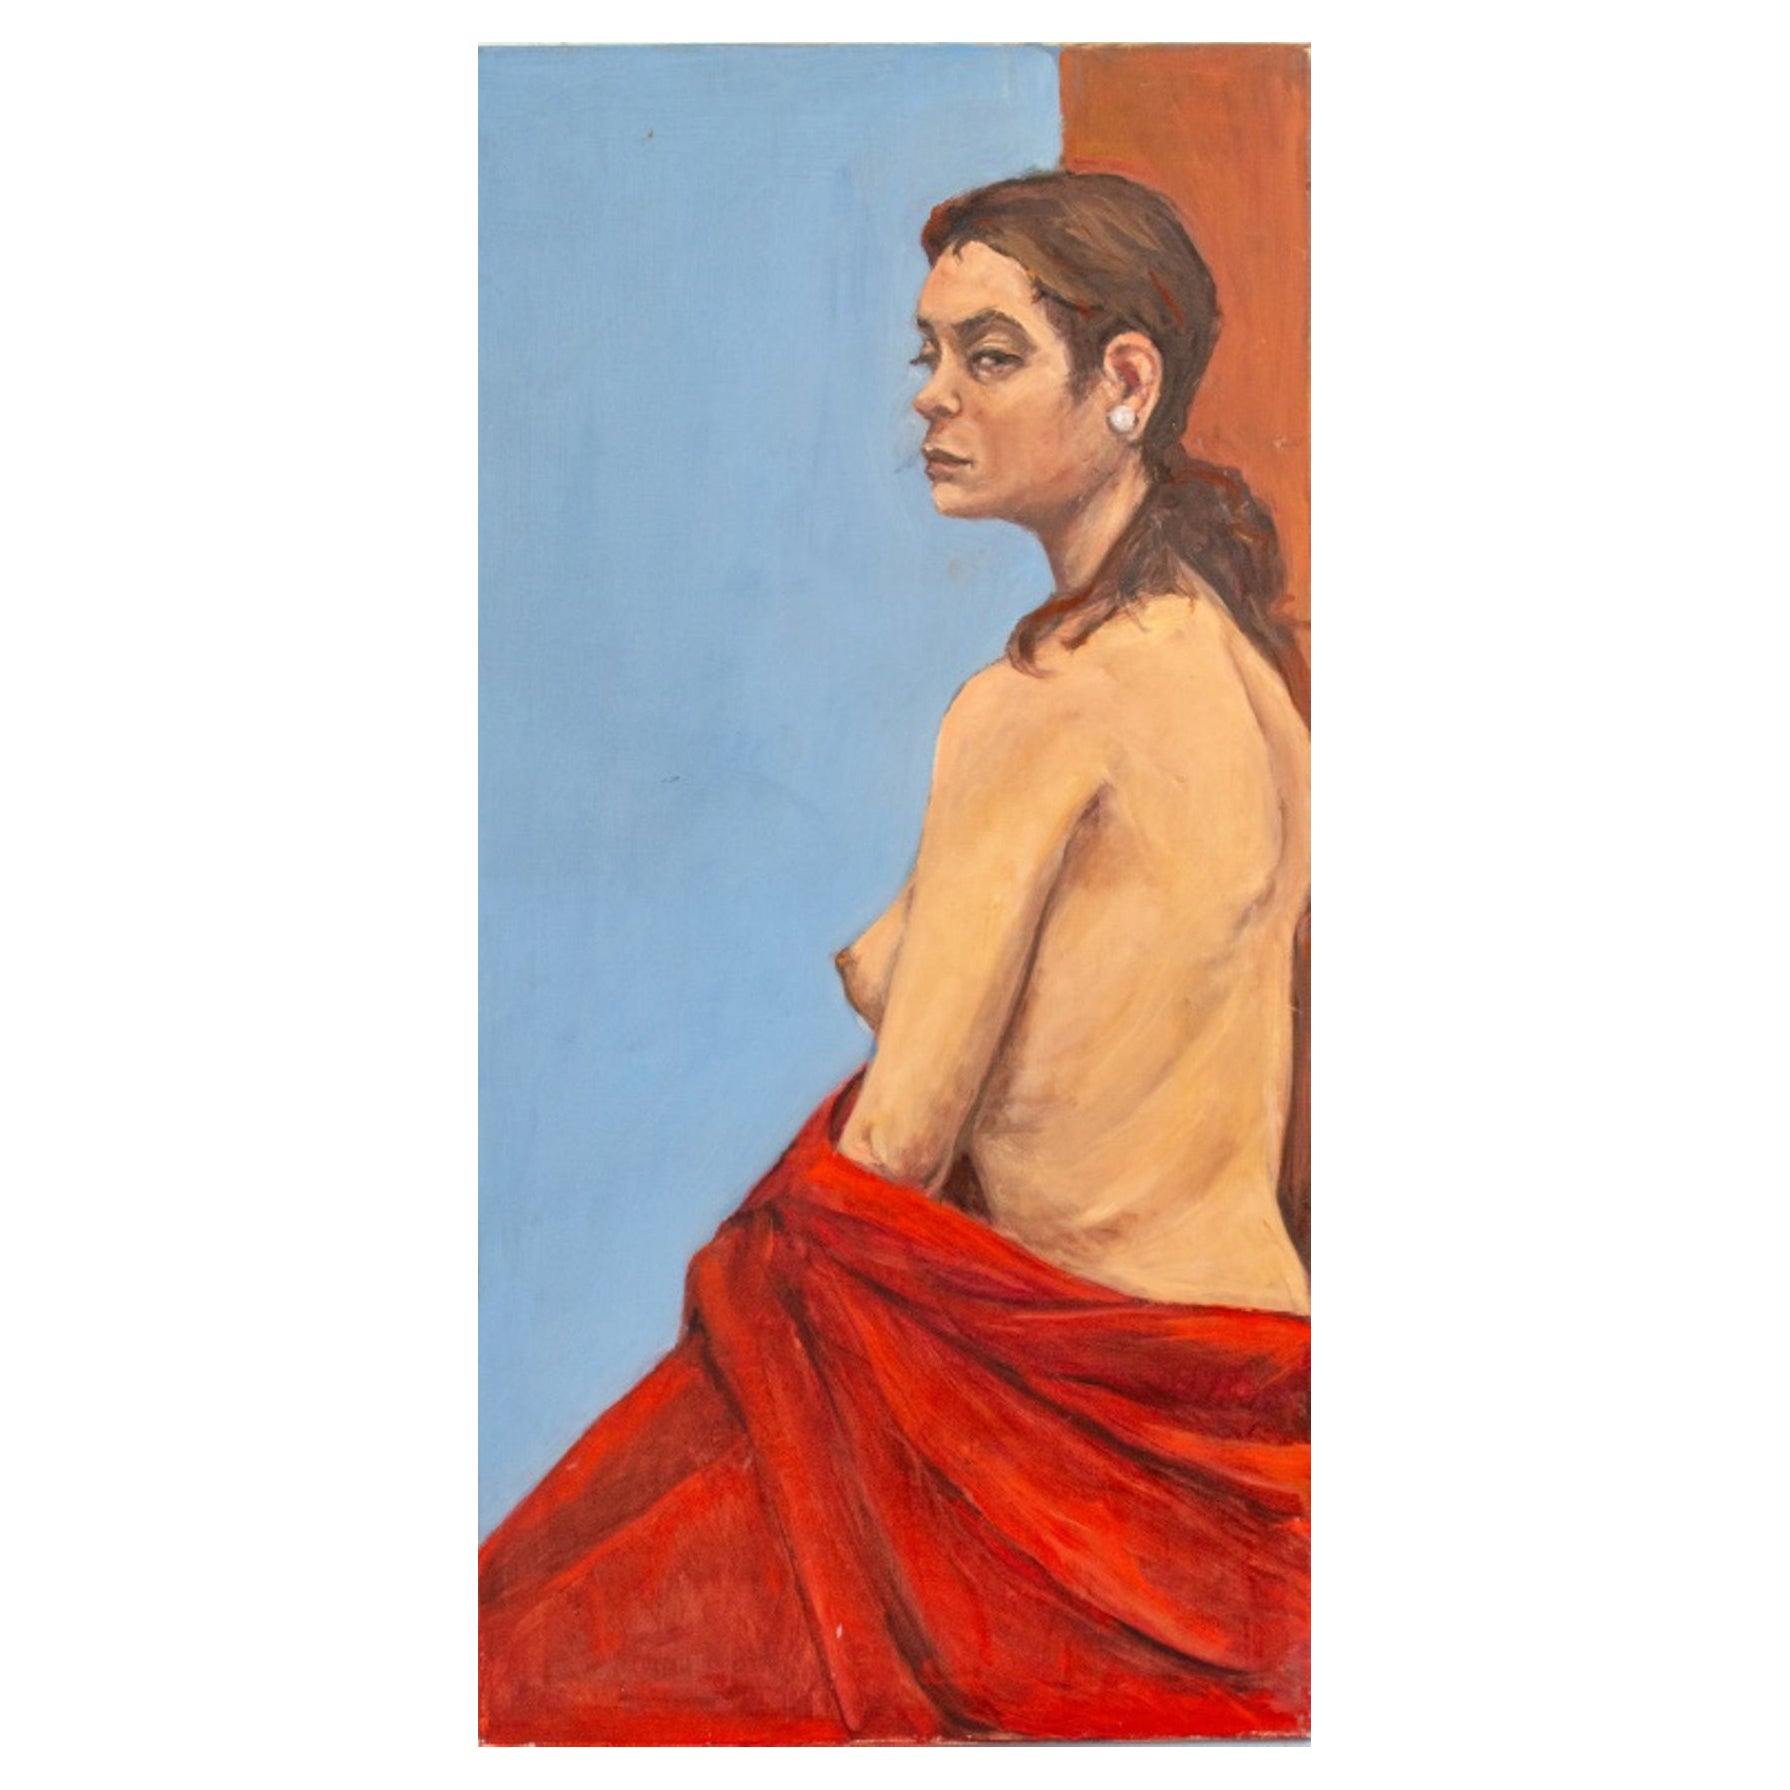 Penny Purpura Nude Woman Portrait Oil Painting